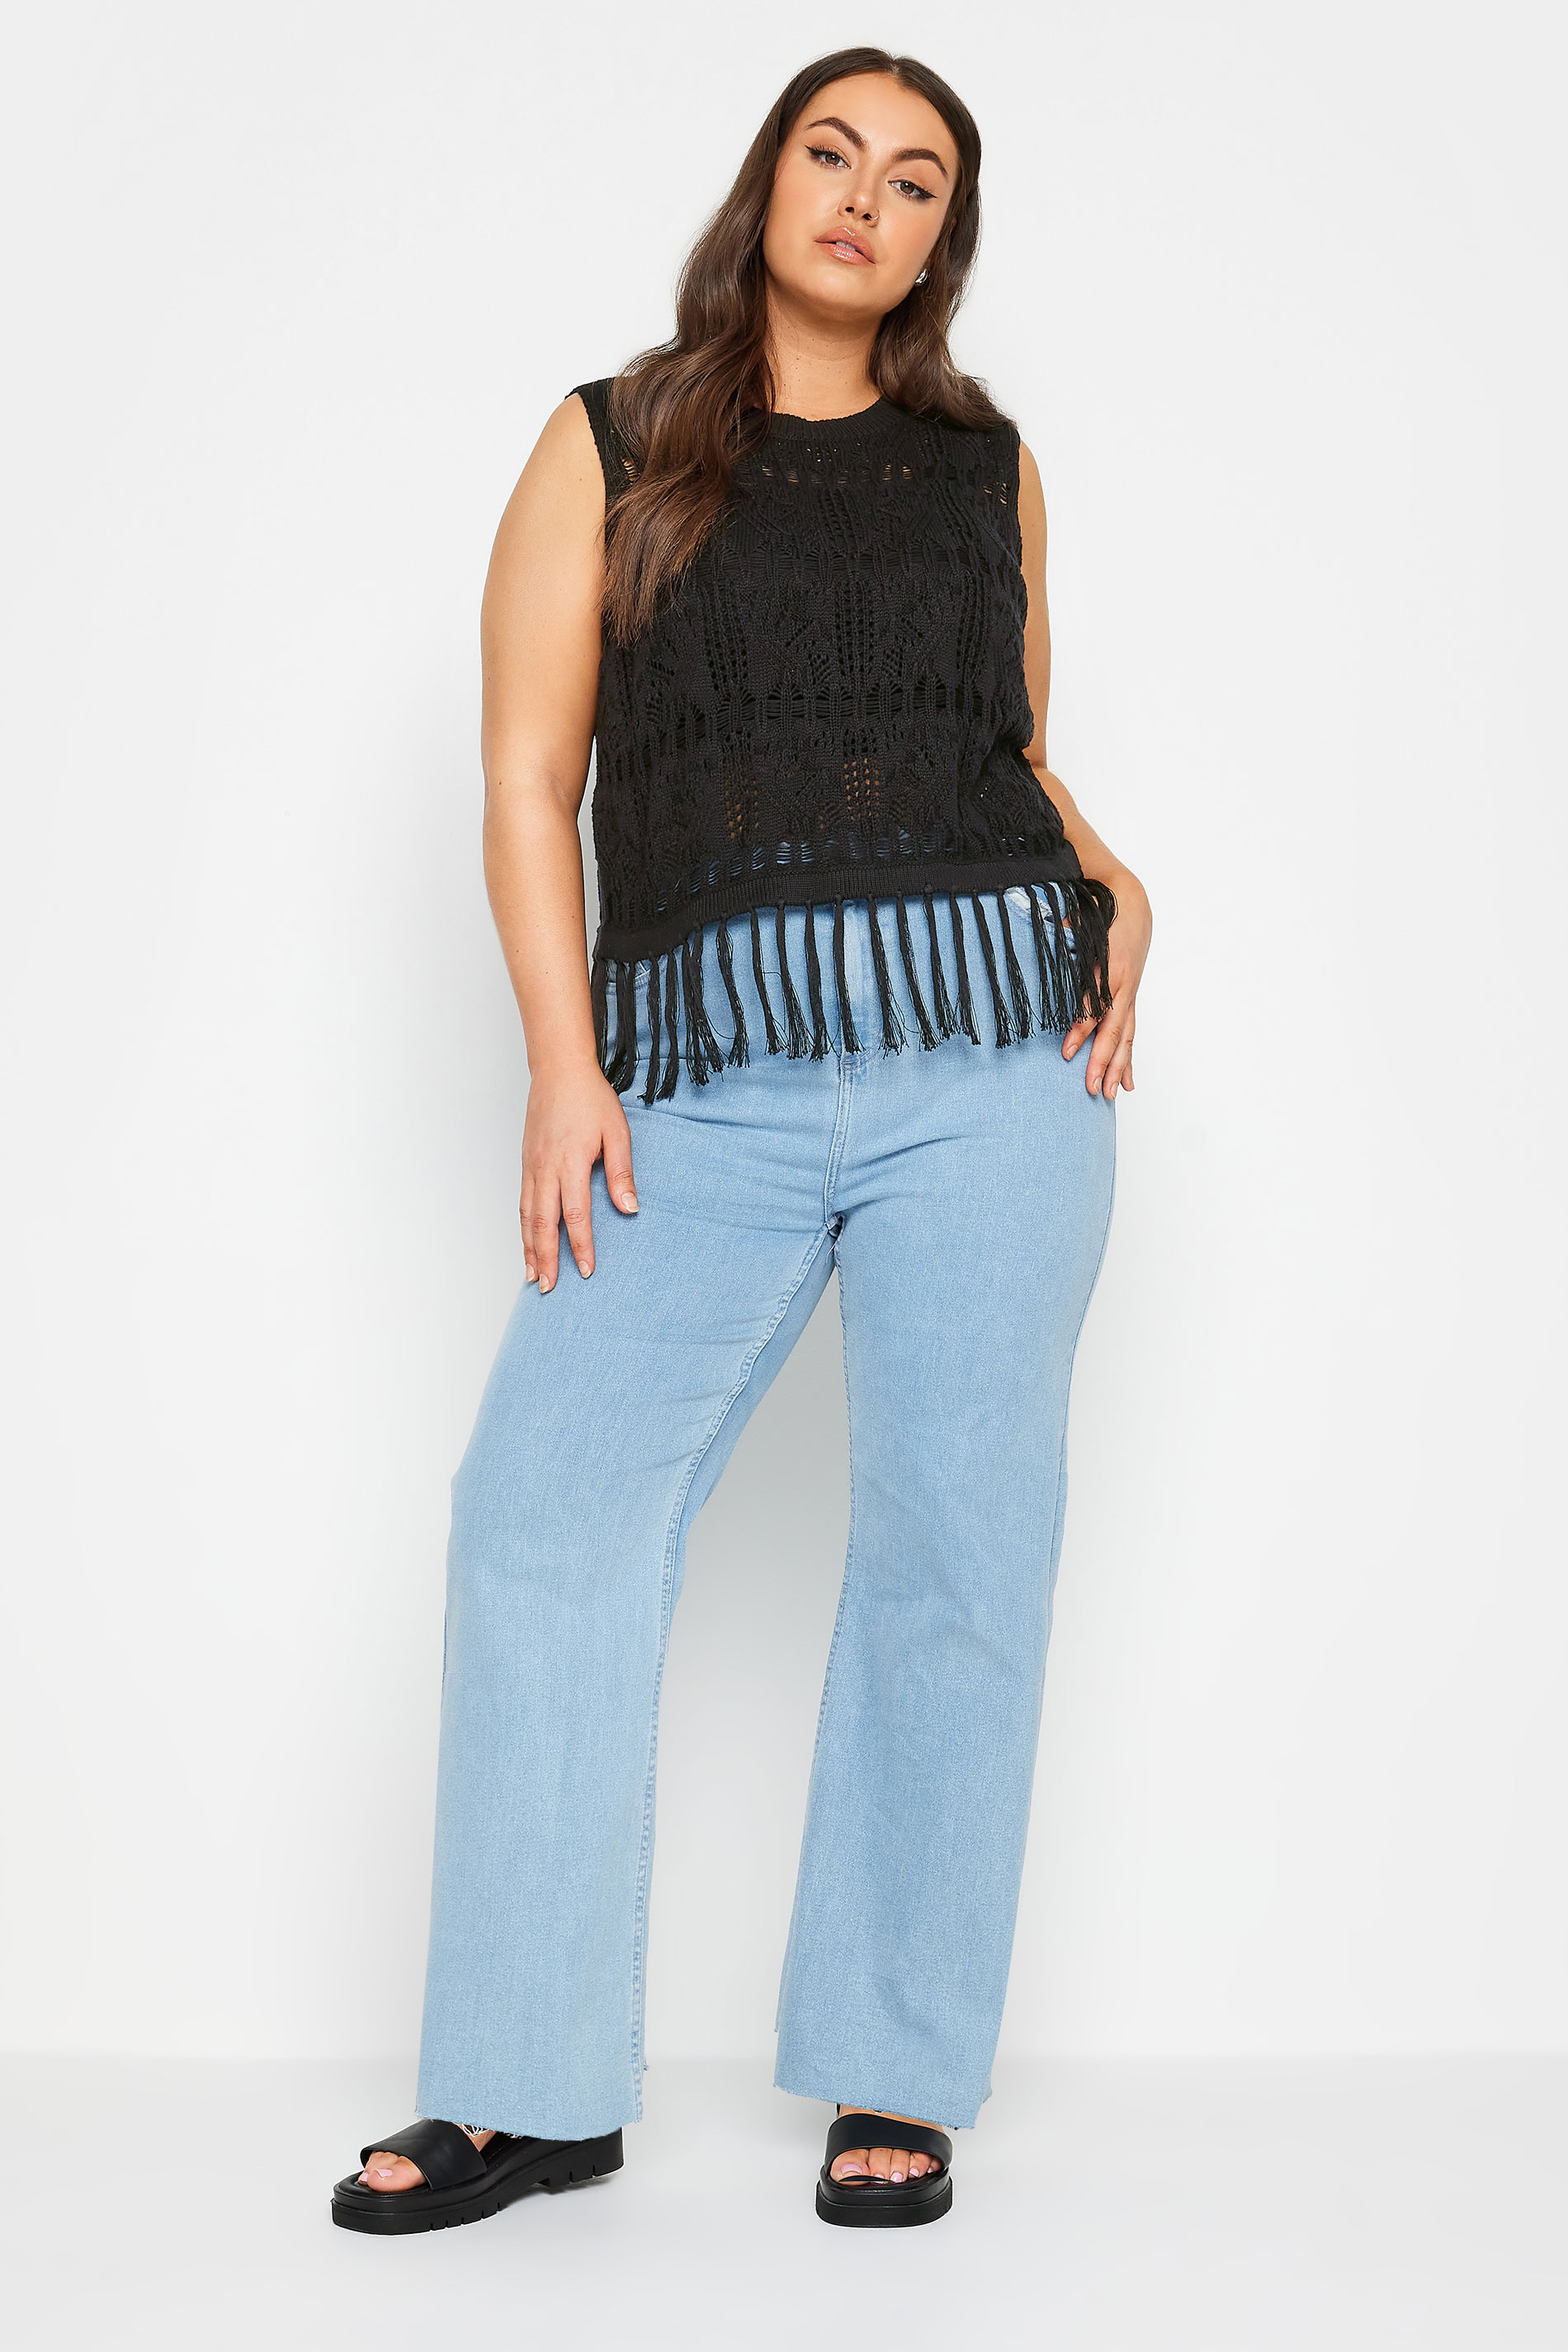 YOURS Plus Size Black Crochet Fringe Vest Top | Yours Clothing 2